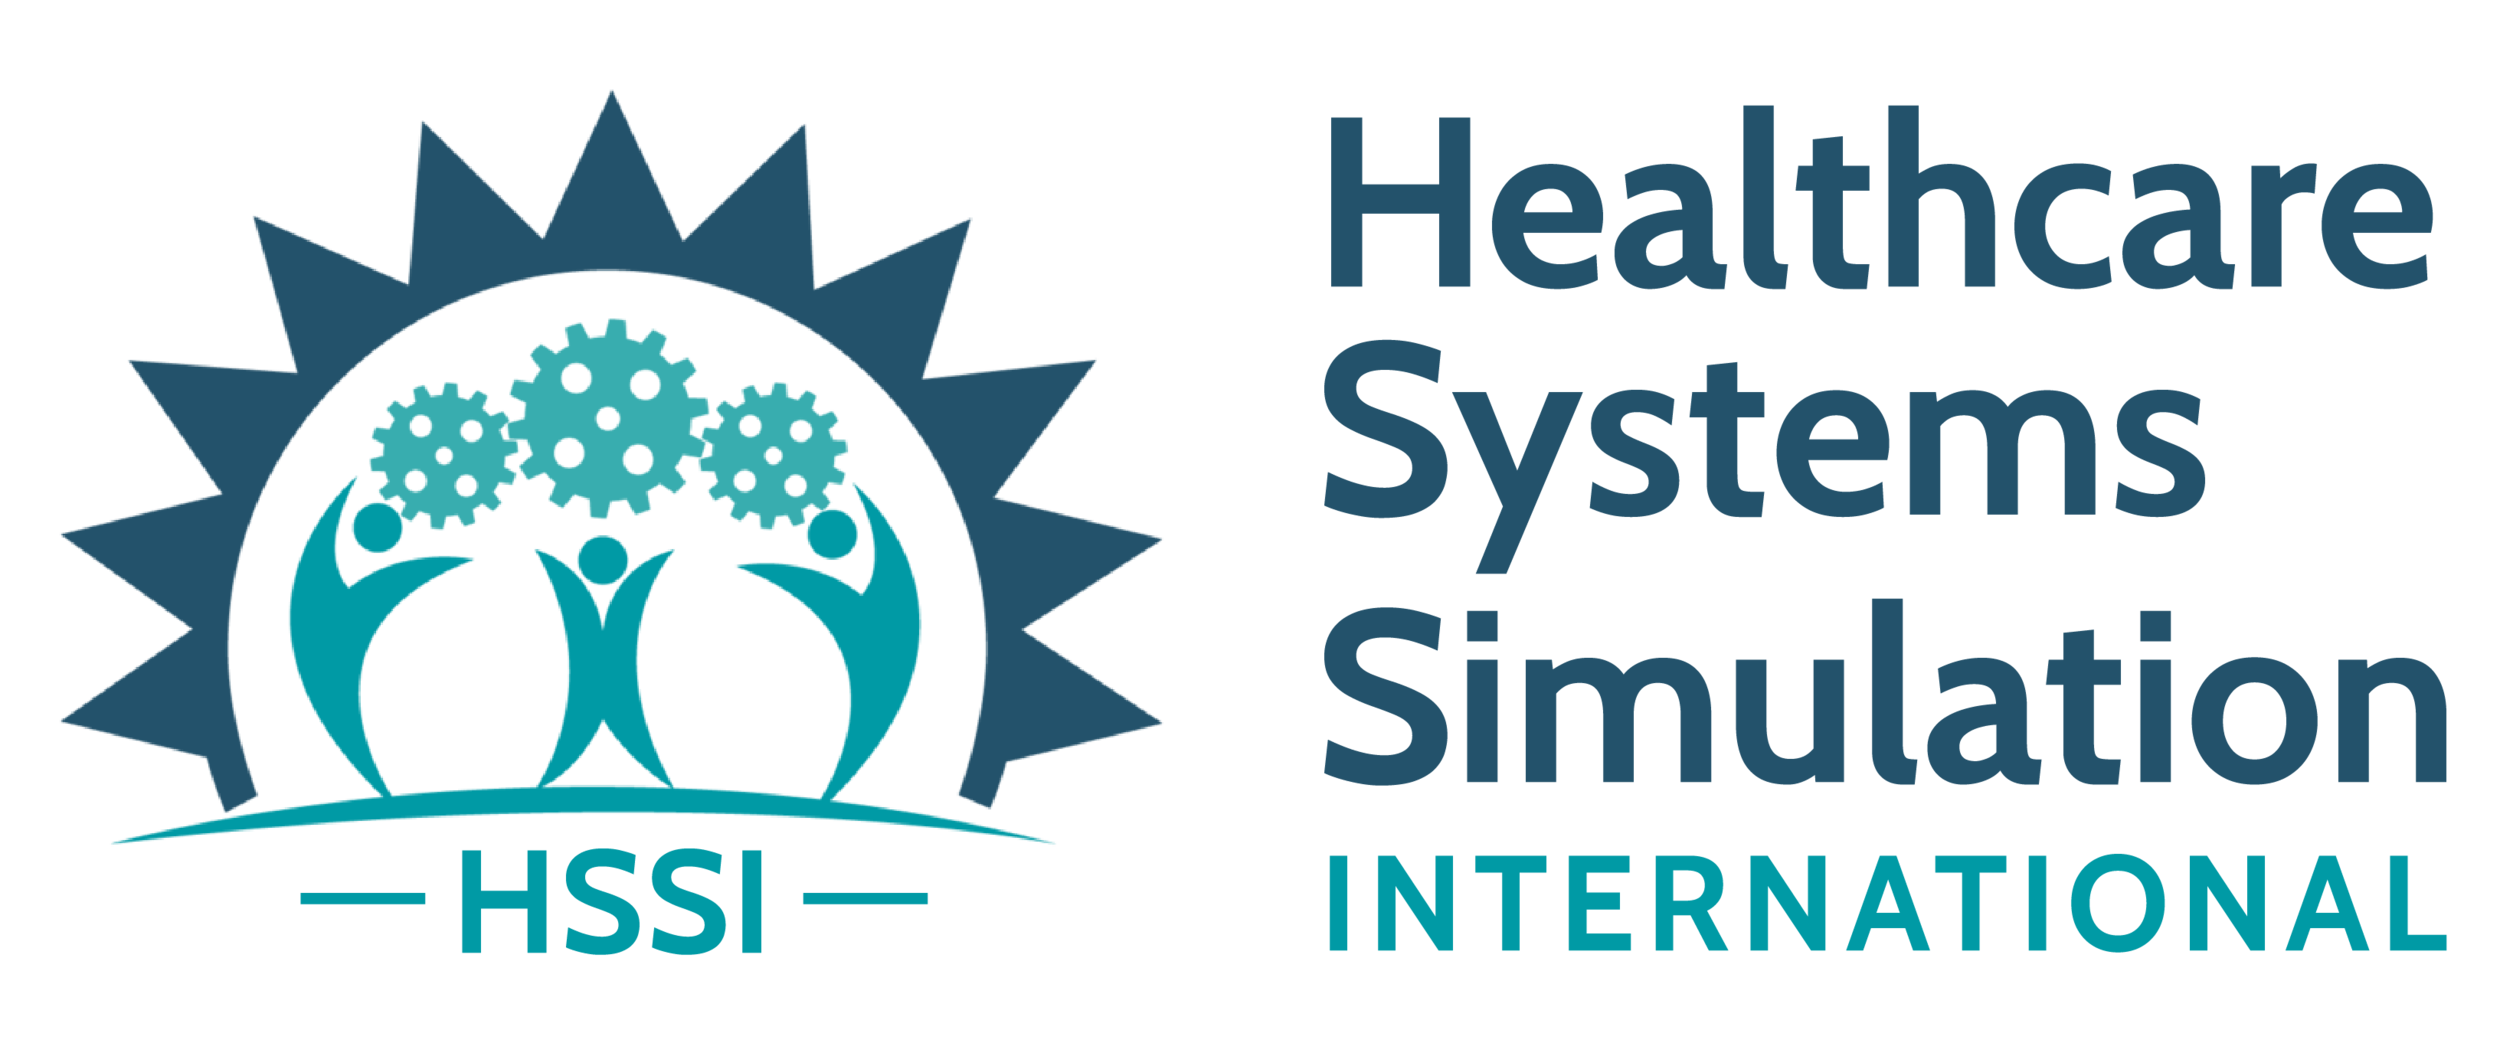 Healthcare Systems Simulation International 